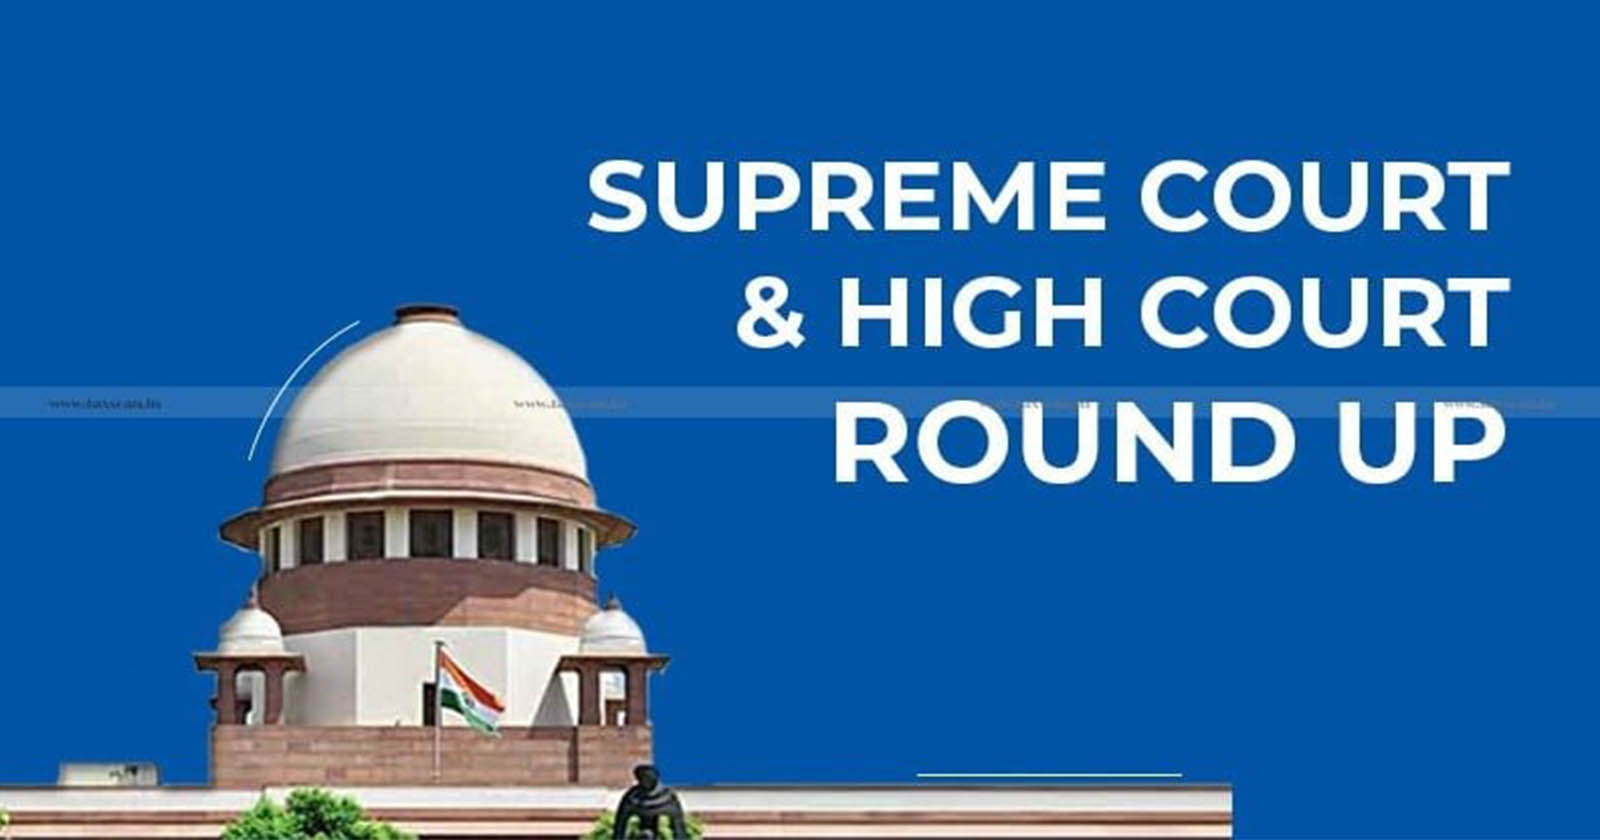 Supreme Court - SC - Supreme Court Weekly Round Up - High Court Weekly Round Up - Weekly Round Up - HC - TAXSCAN